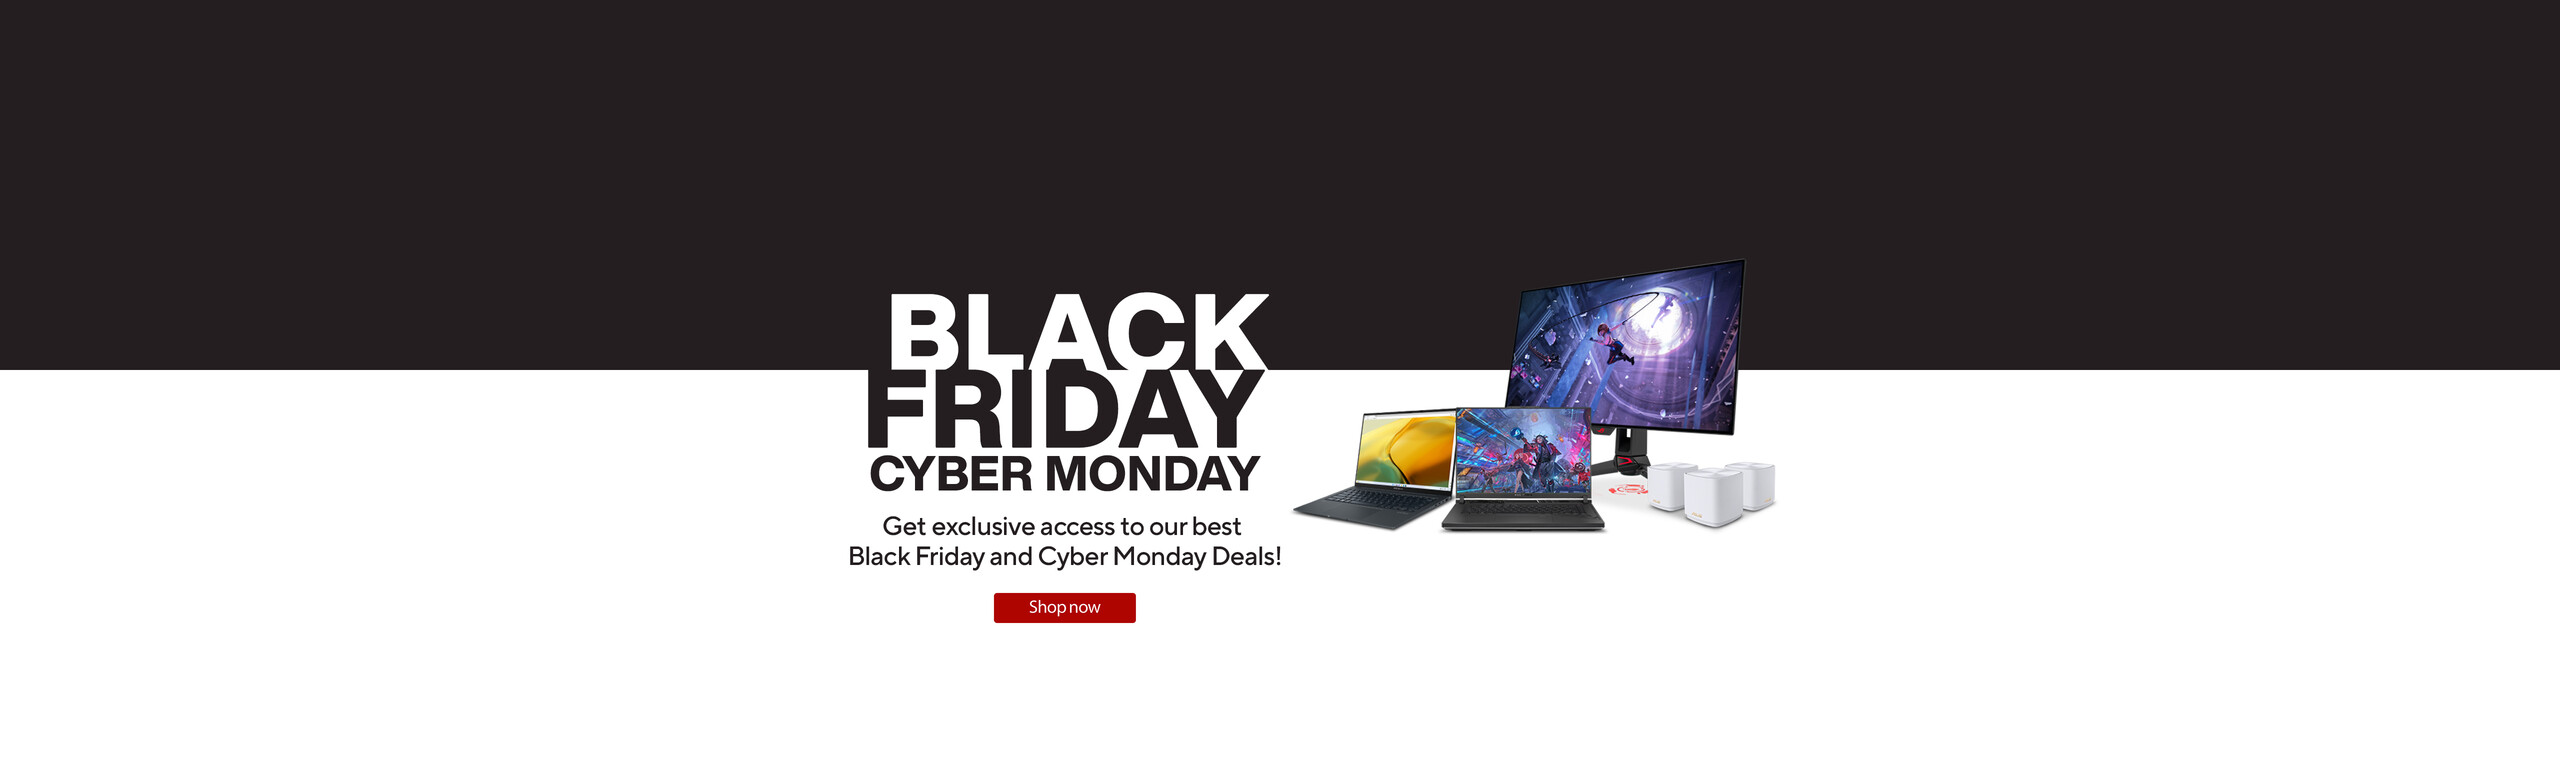 Black Friday Cyber Monday Deals